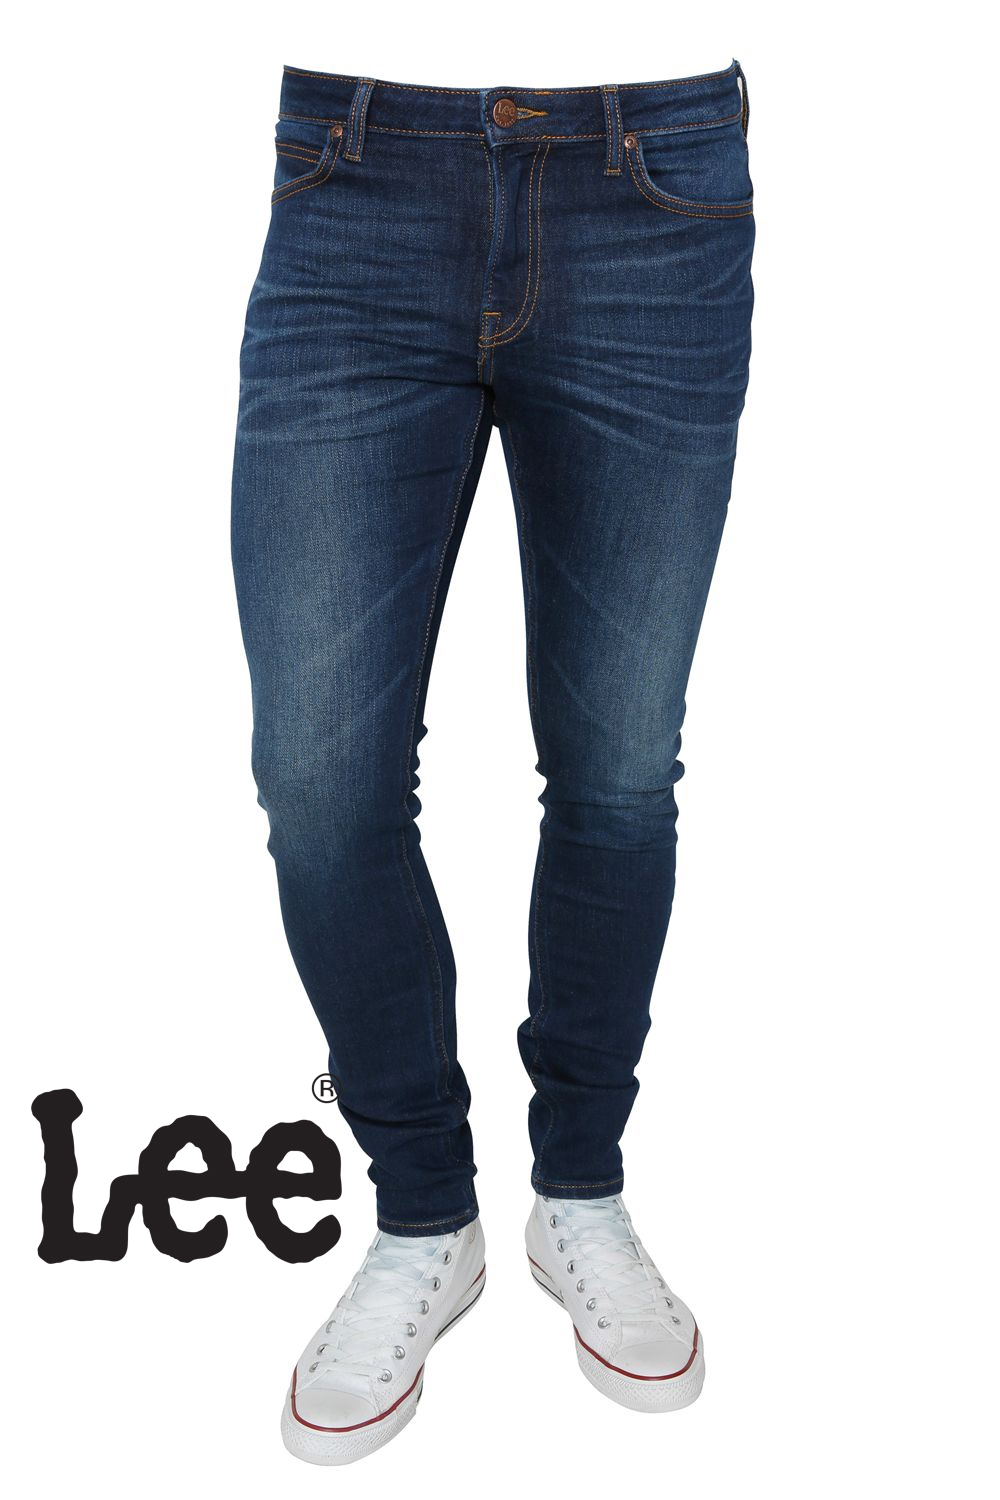 Malone Lee jeans